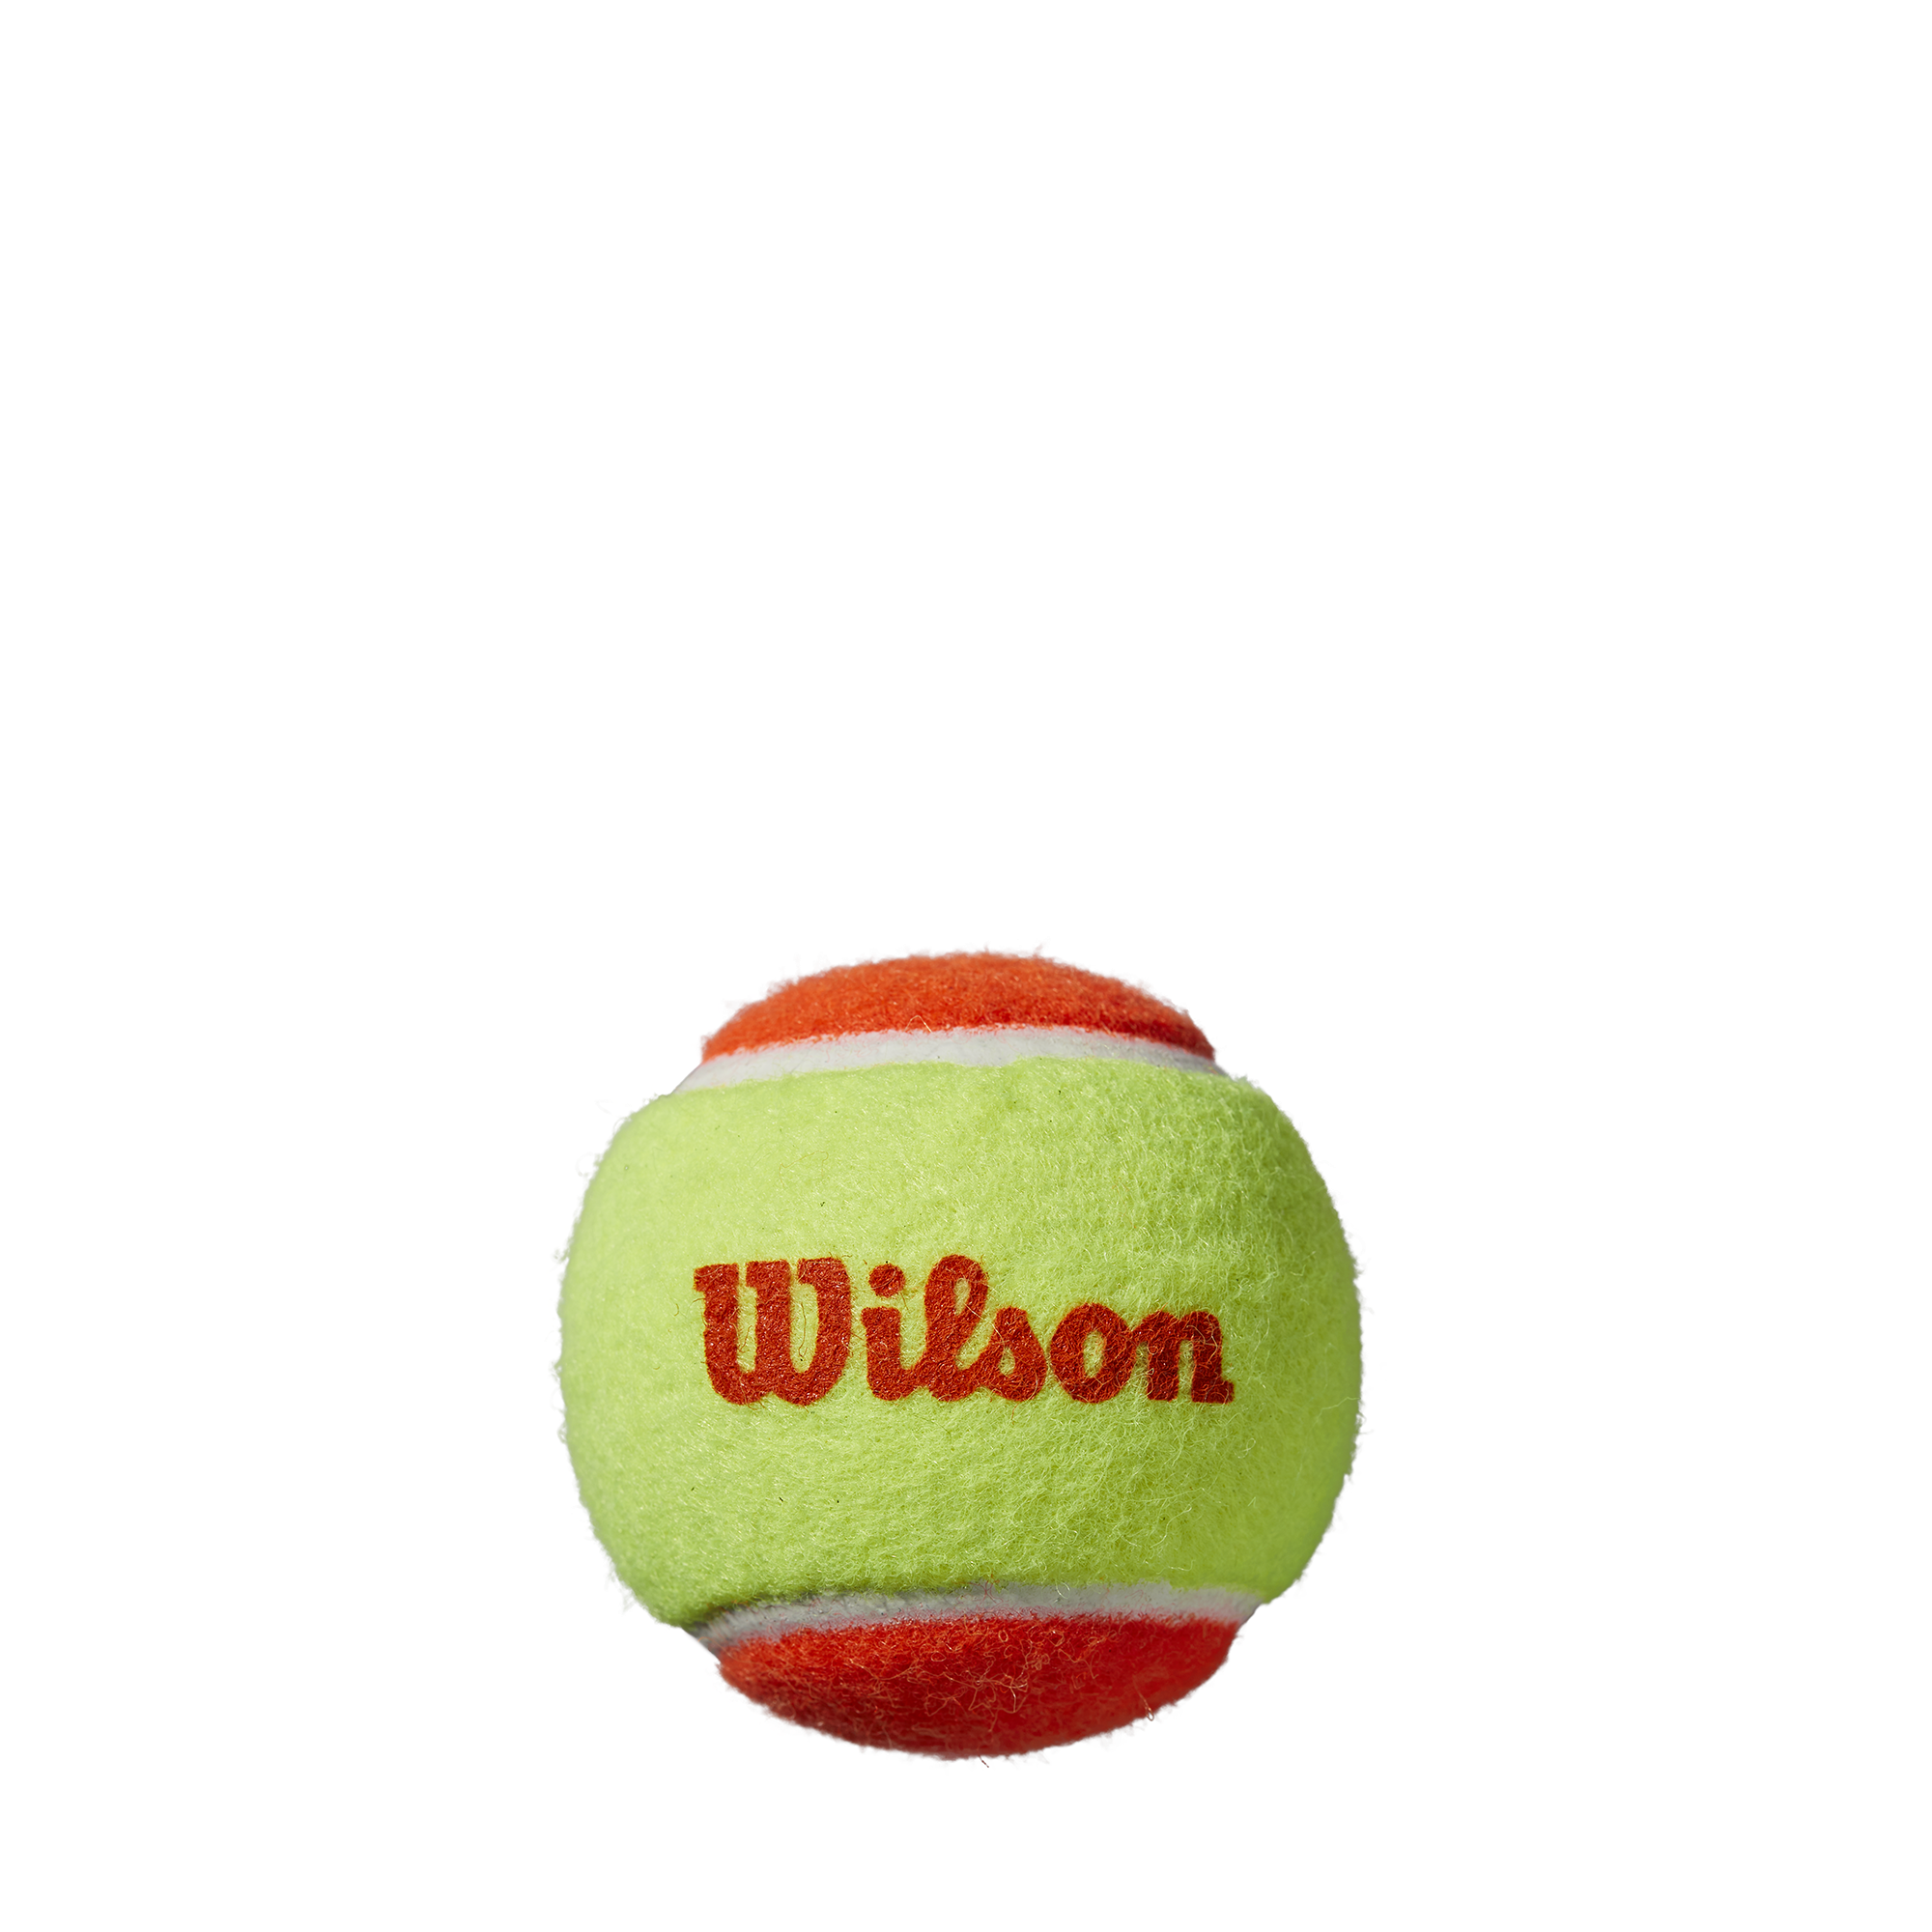 Wilson Tennis on X: Favorite piece from our 2022 @rolandgarros